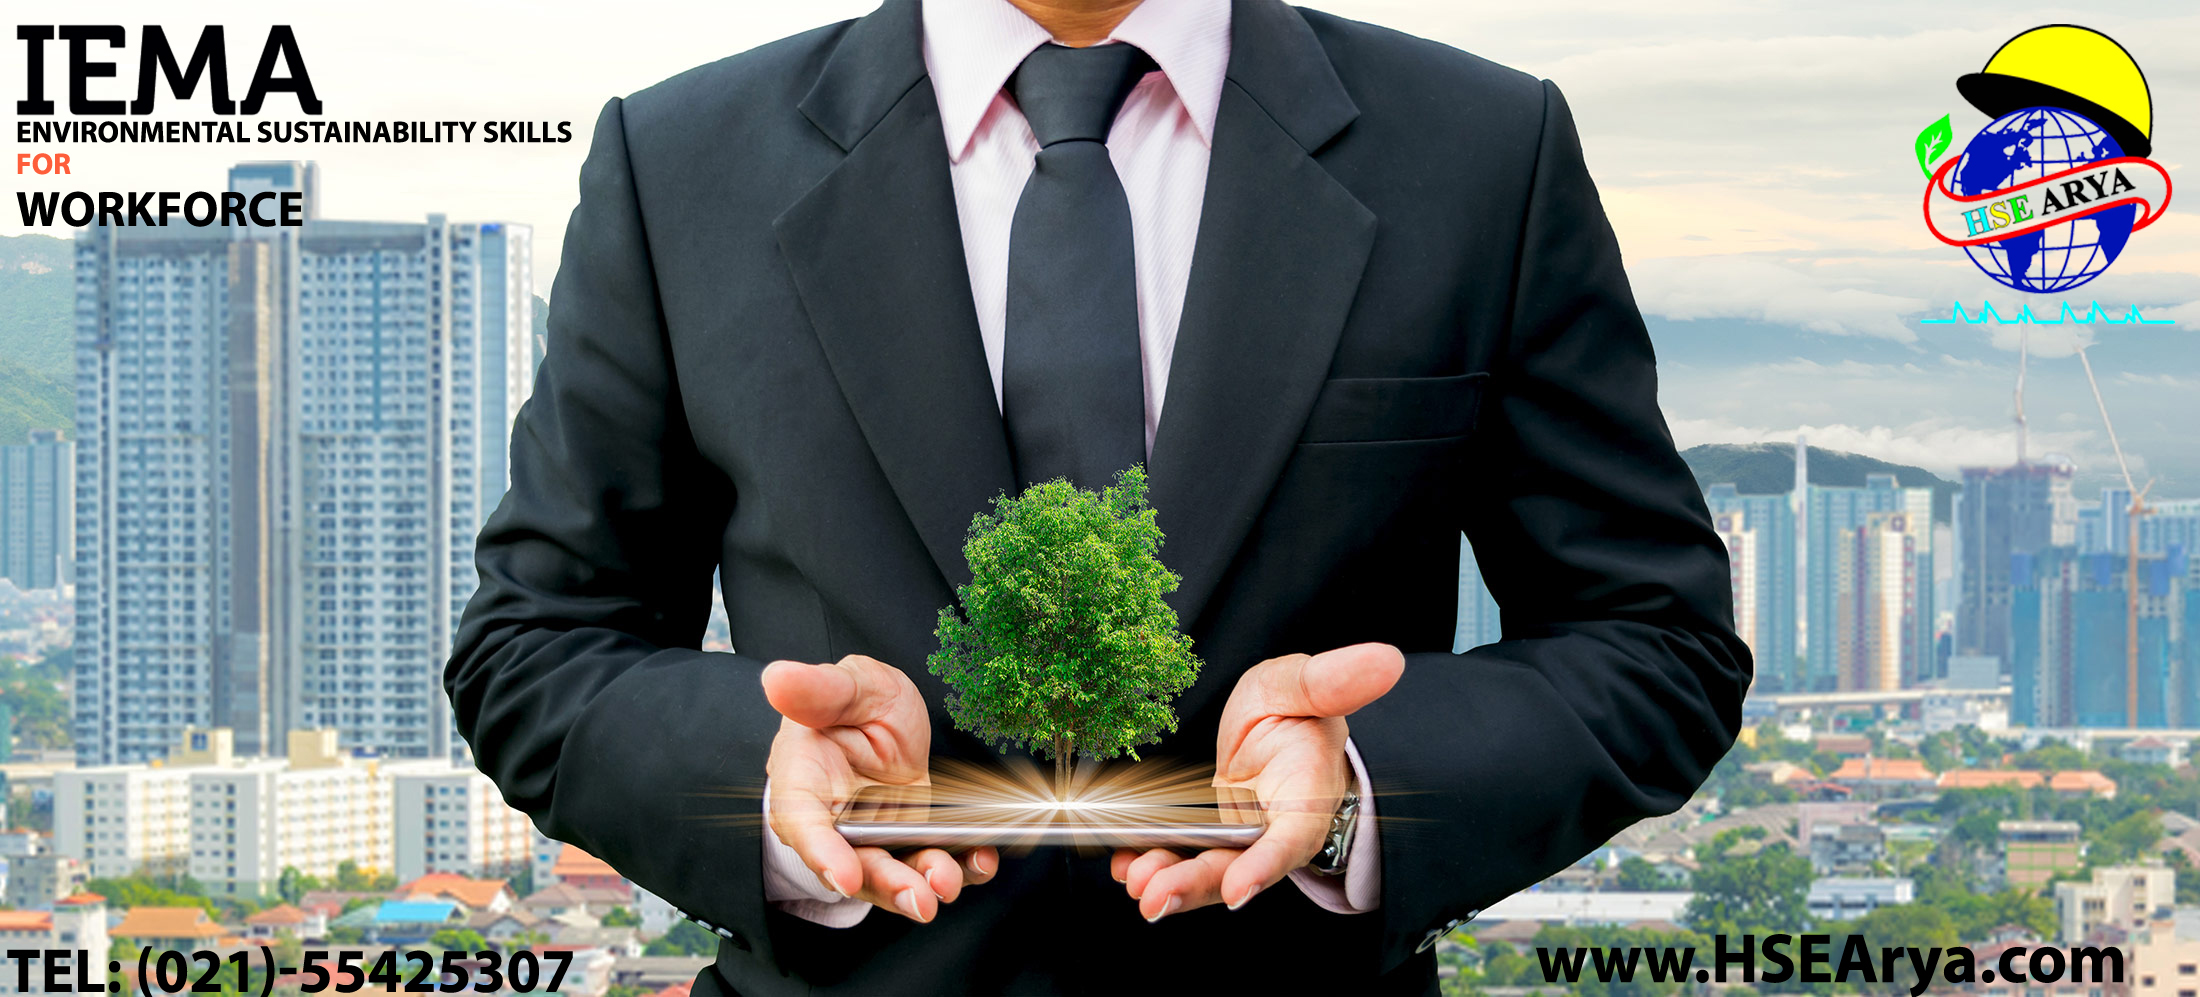 IEMA Environmental Sustainability Skills for workforce